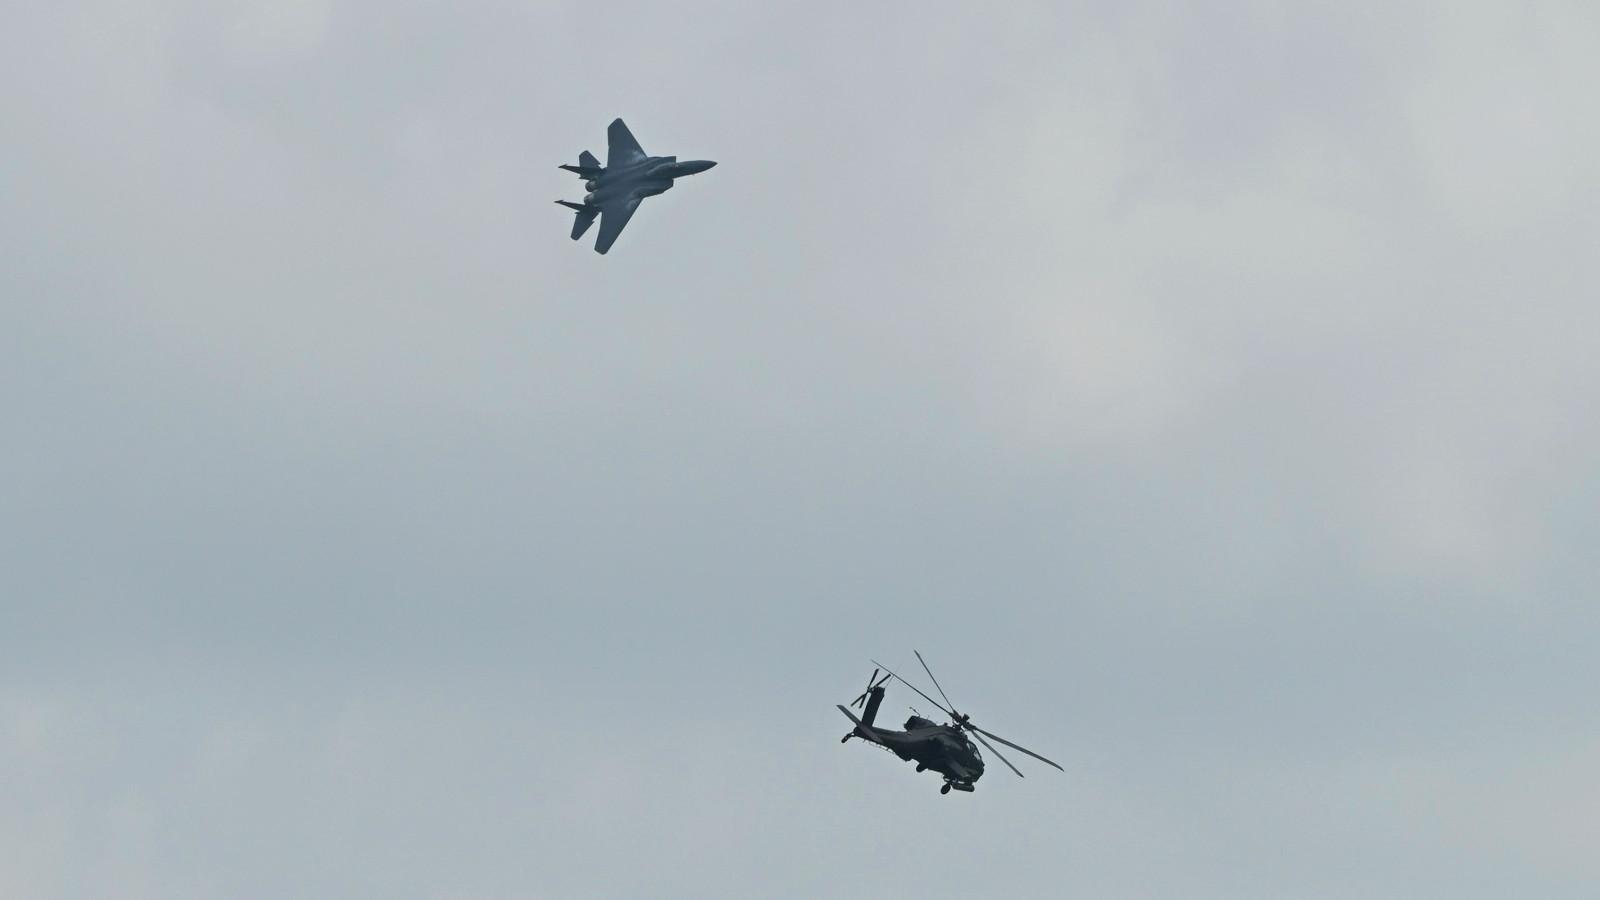 RSAF Thrills Crowds with Aerial Maneuvers